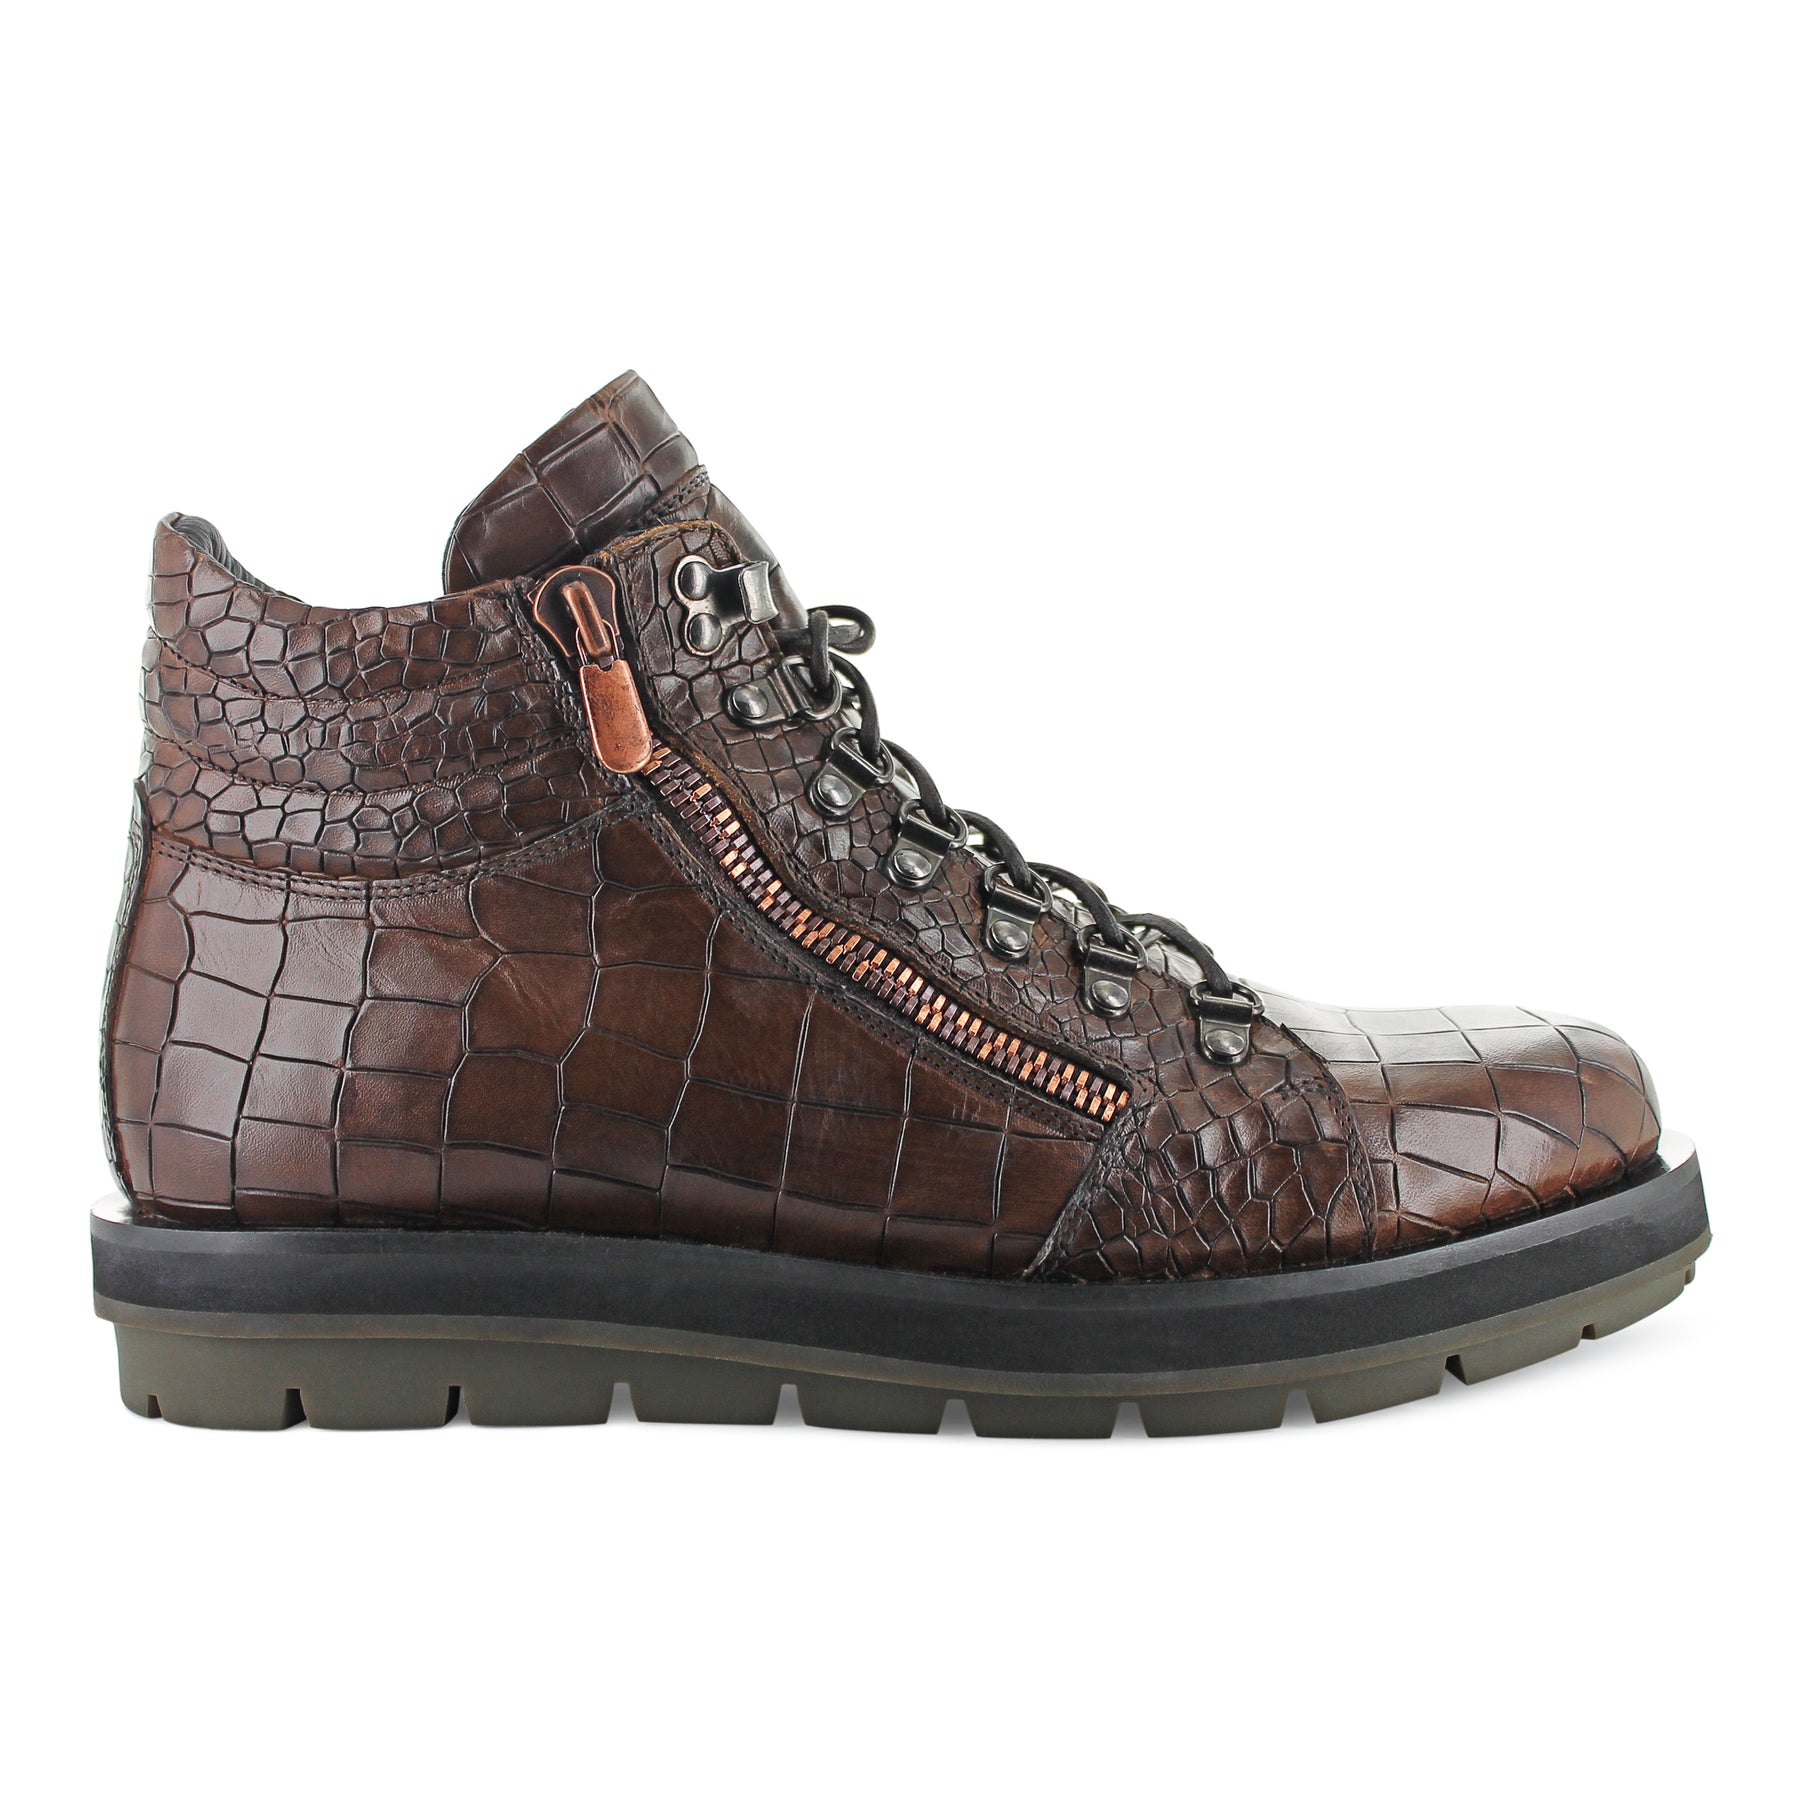 S8619 - Brown Leather Moc Croc